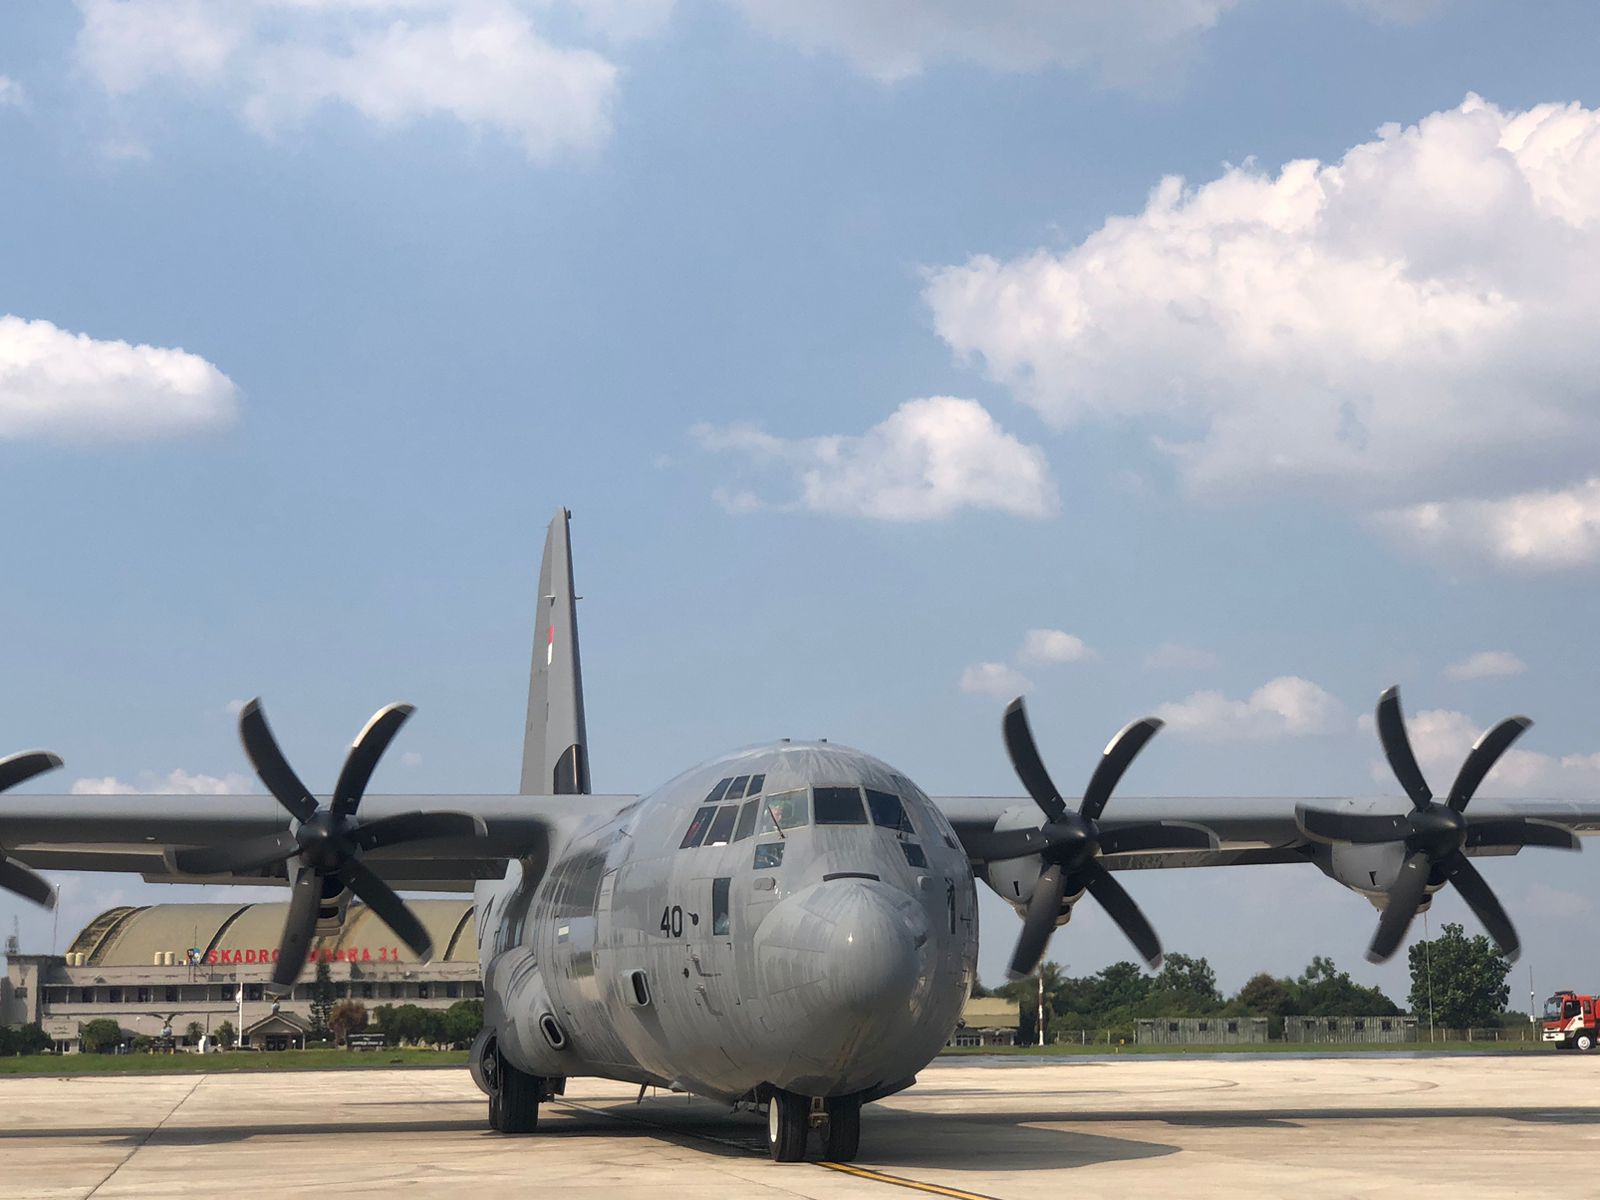 Pesawat C-130J Super Hercules TNI AU Kedua Tiba di Indonesia